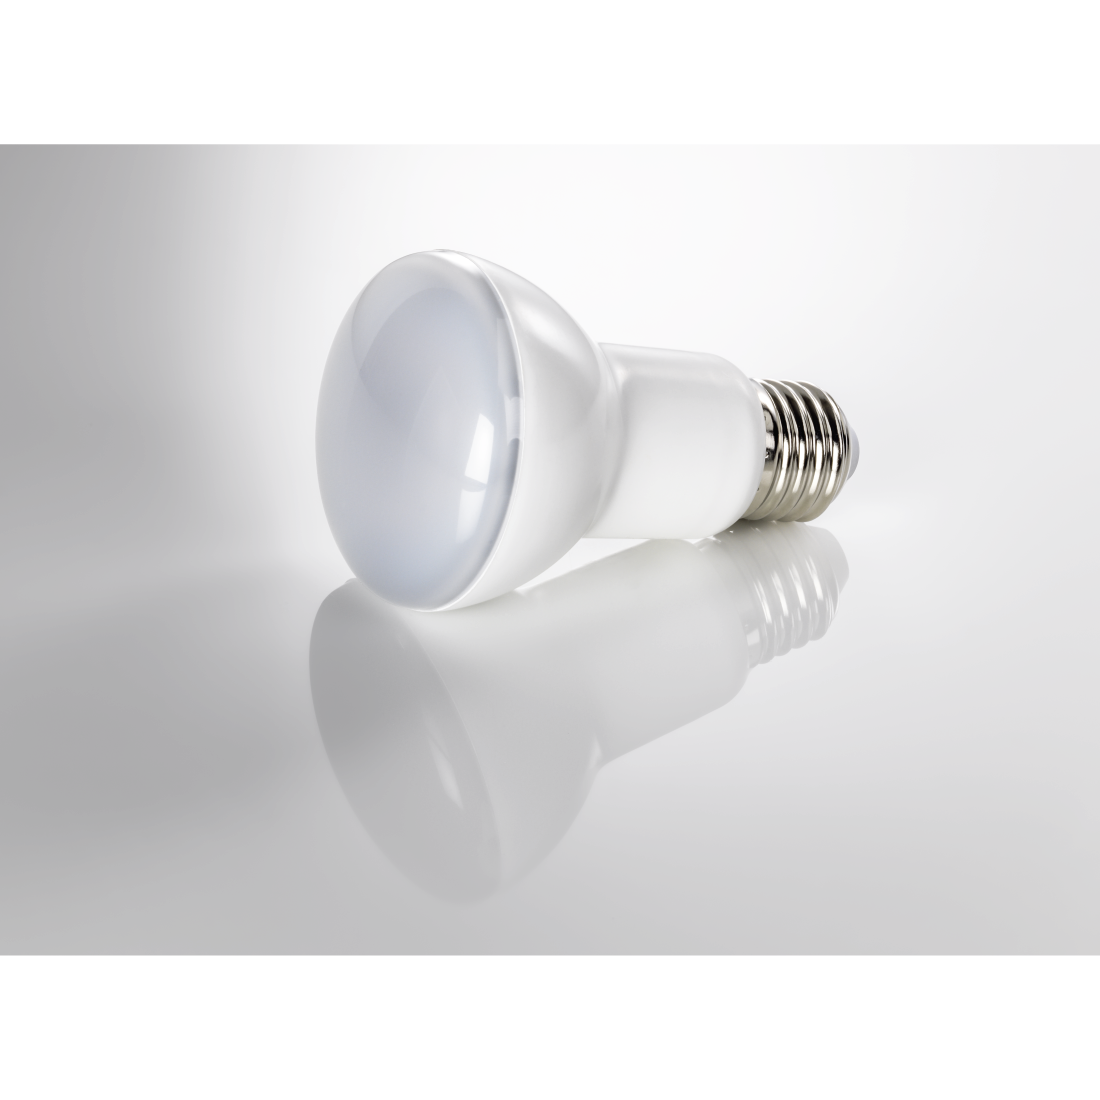 abx3 High-Res Image 3 - Xavax, LED Bulb, E27, 530 lm Replaces 45 W, Reflector Bulb R63, warm white